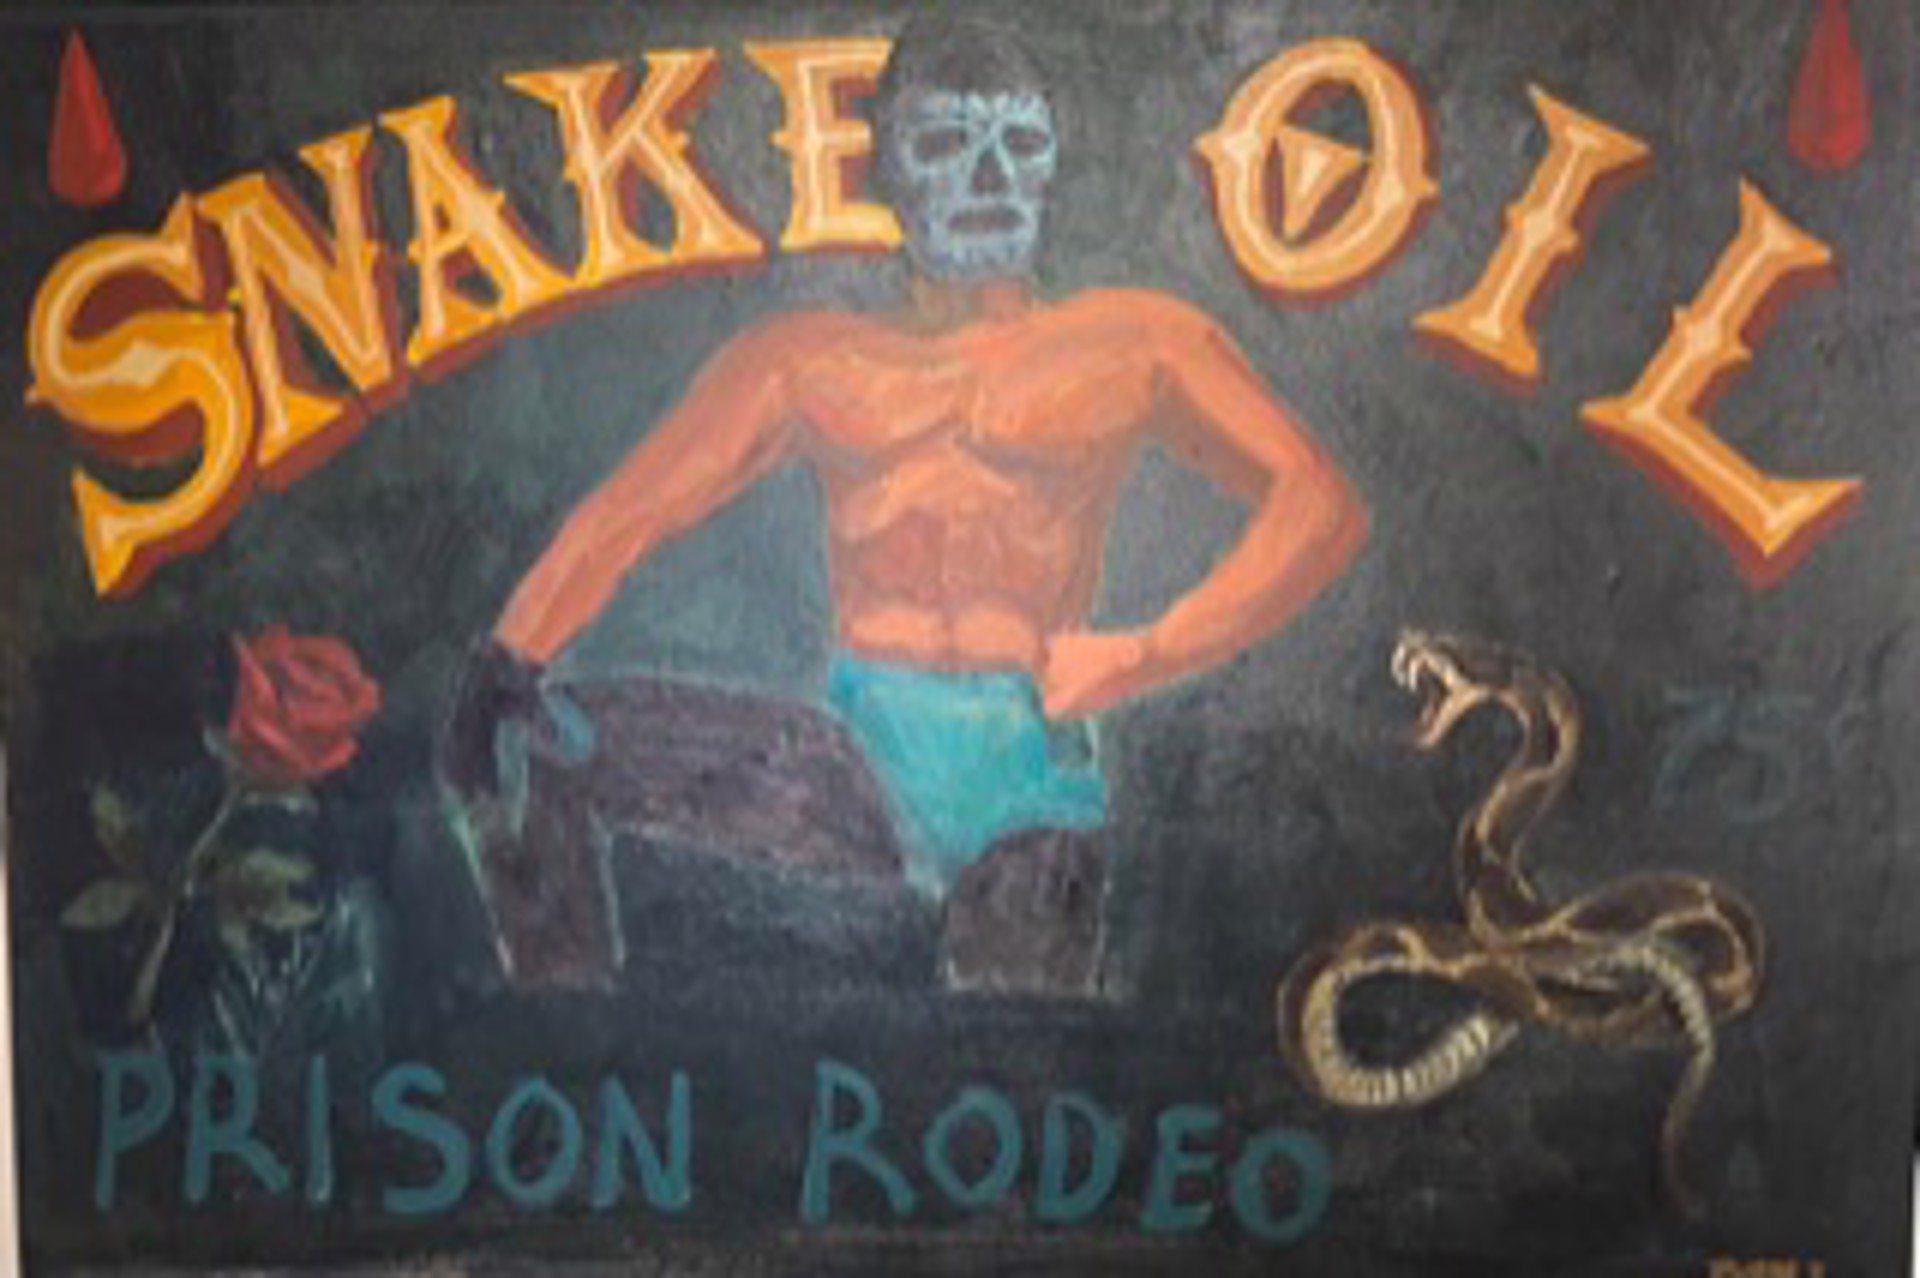 Snake Oil Prison Rodeo by Evan Jones